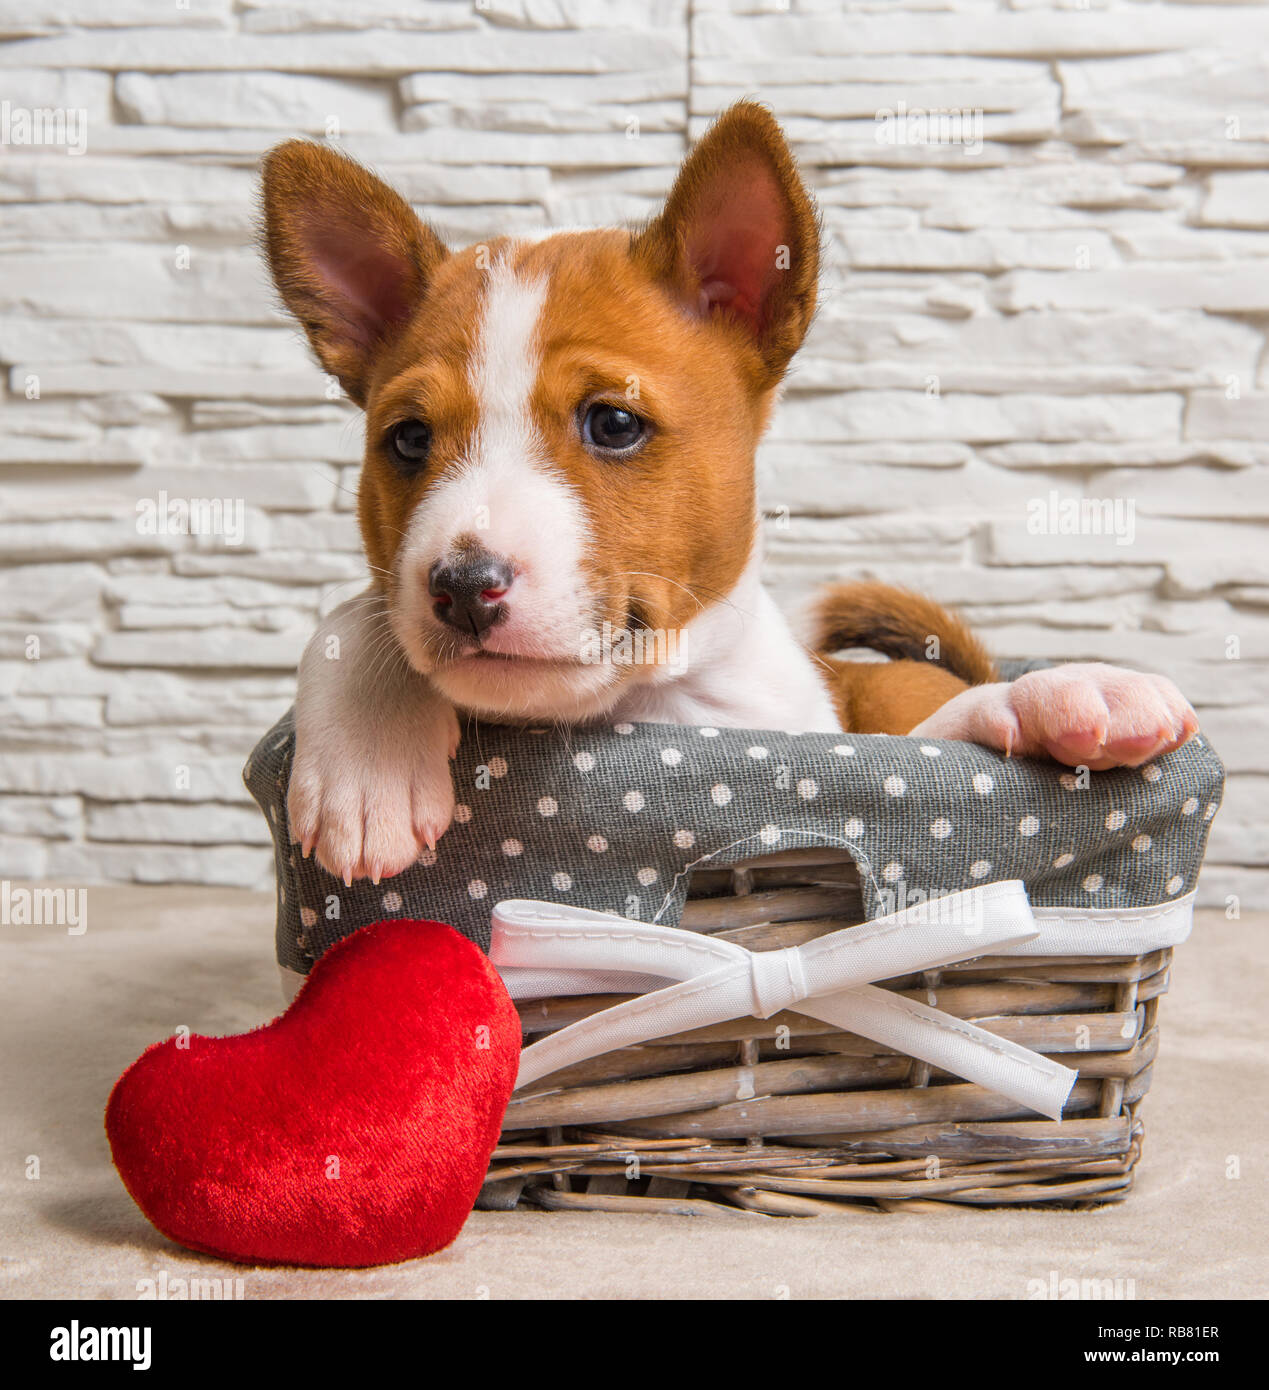 Funny Basenji puppy dog in the basket Stock Photo - Alamy